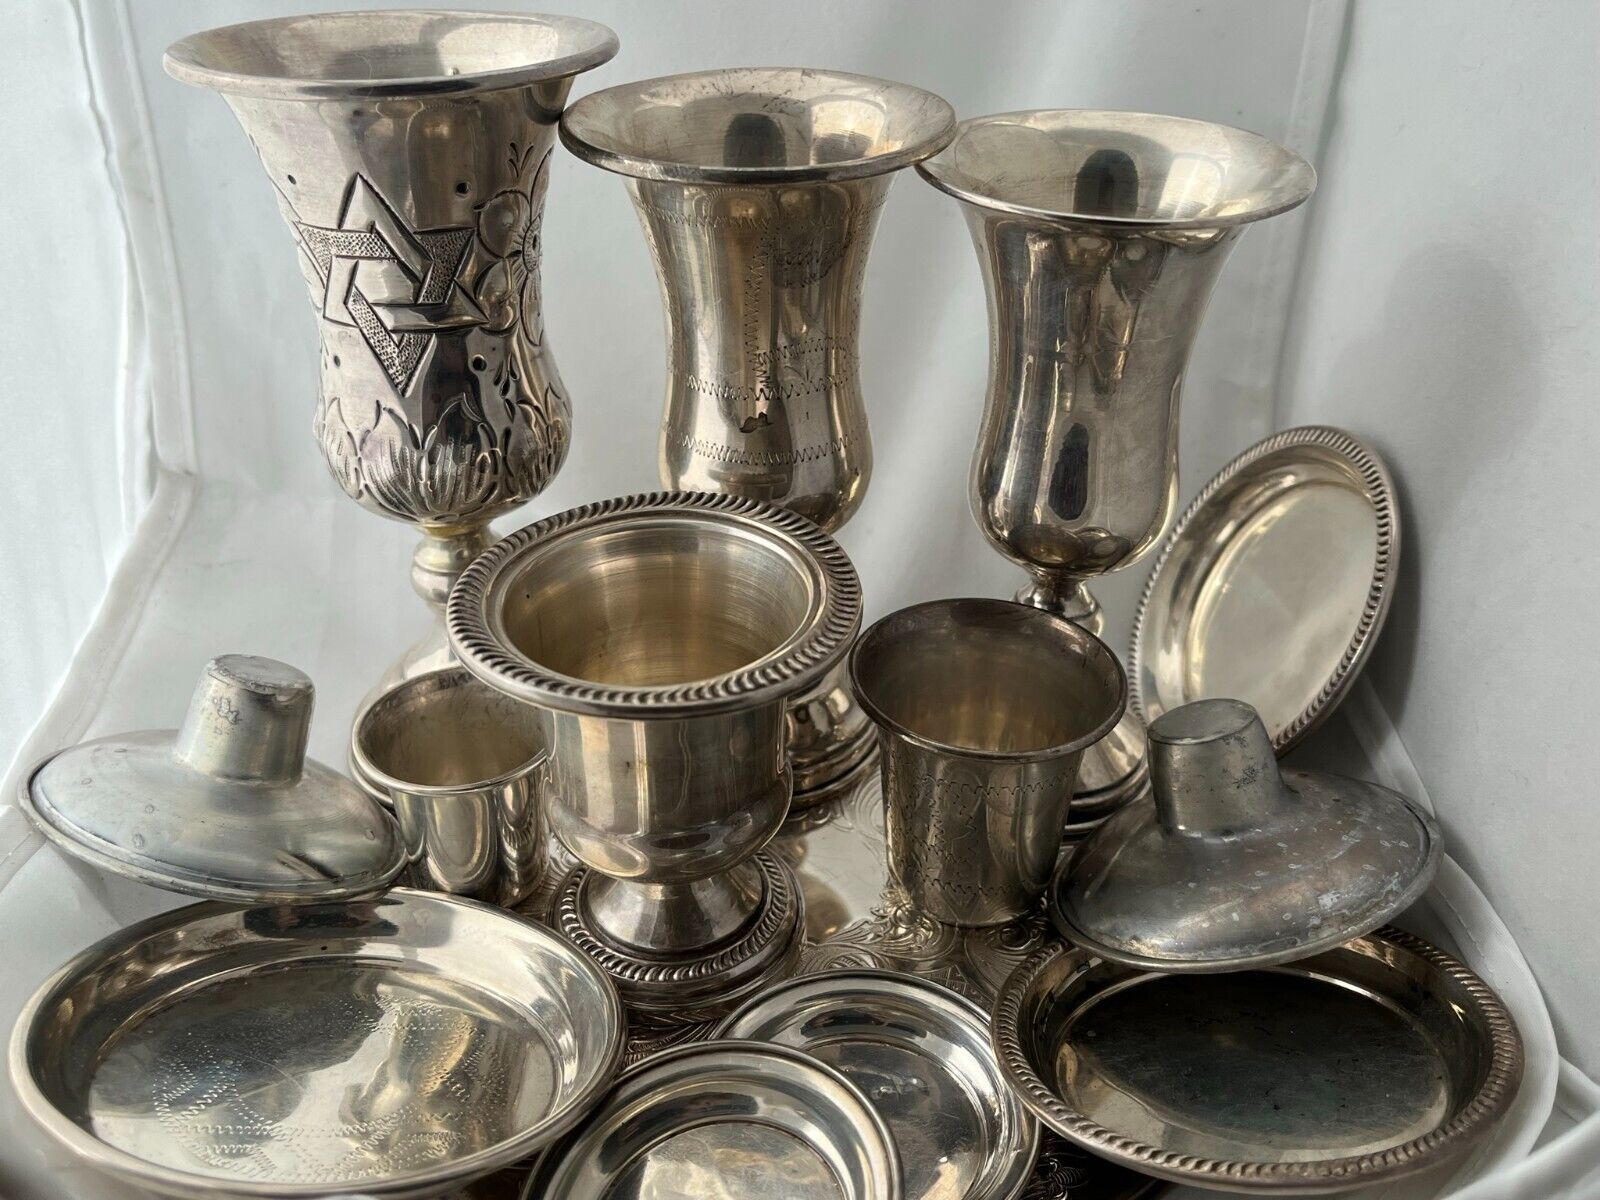 Antique Jewish Kiddish Cup Collection Cups Coasters Lids Ornate Serving Platform